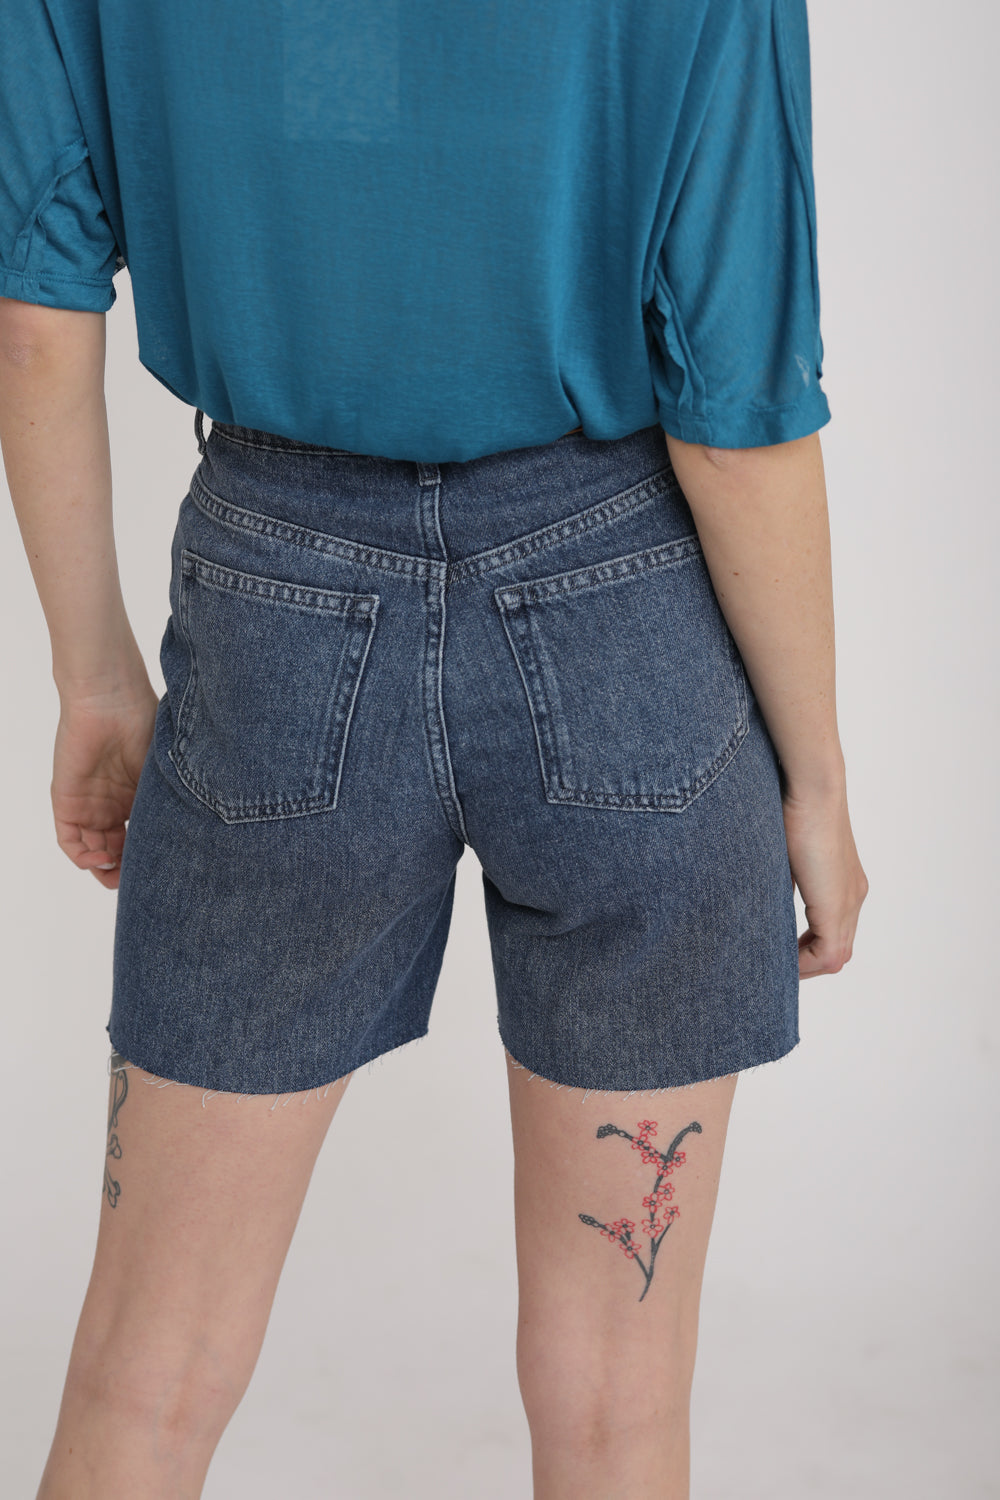 Short Baggi Blue Denim מכנסי ג'ינס קצרים בגזרה משוחררת גבוהה